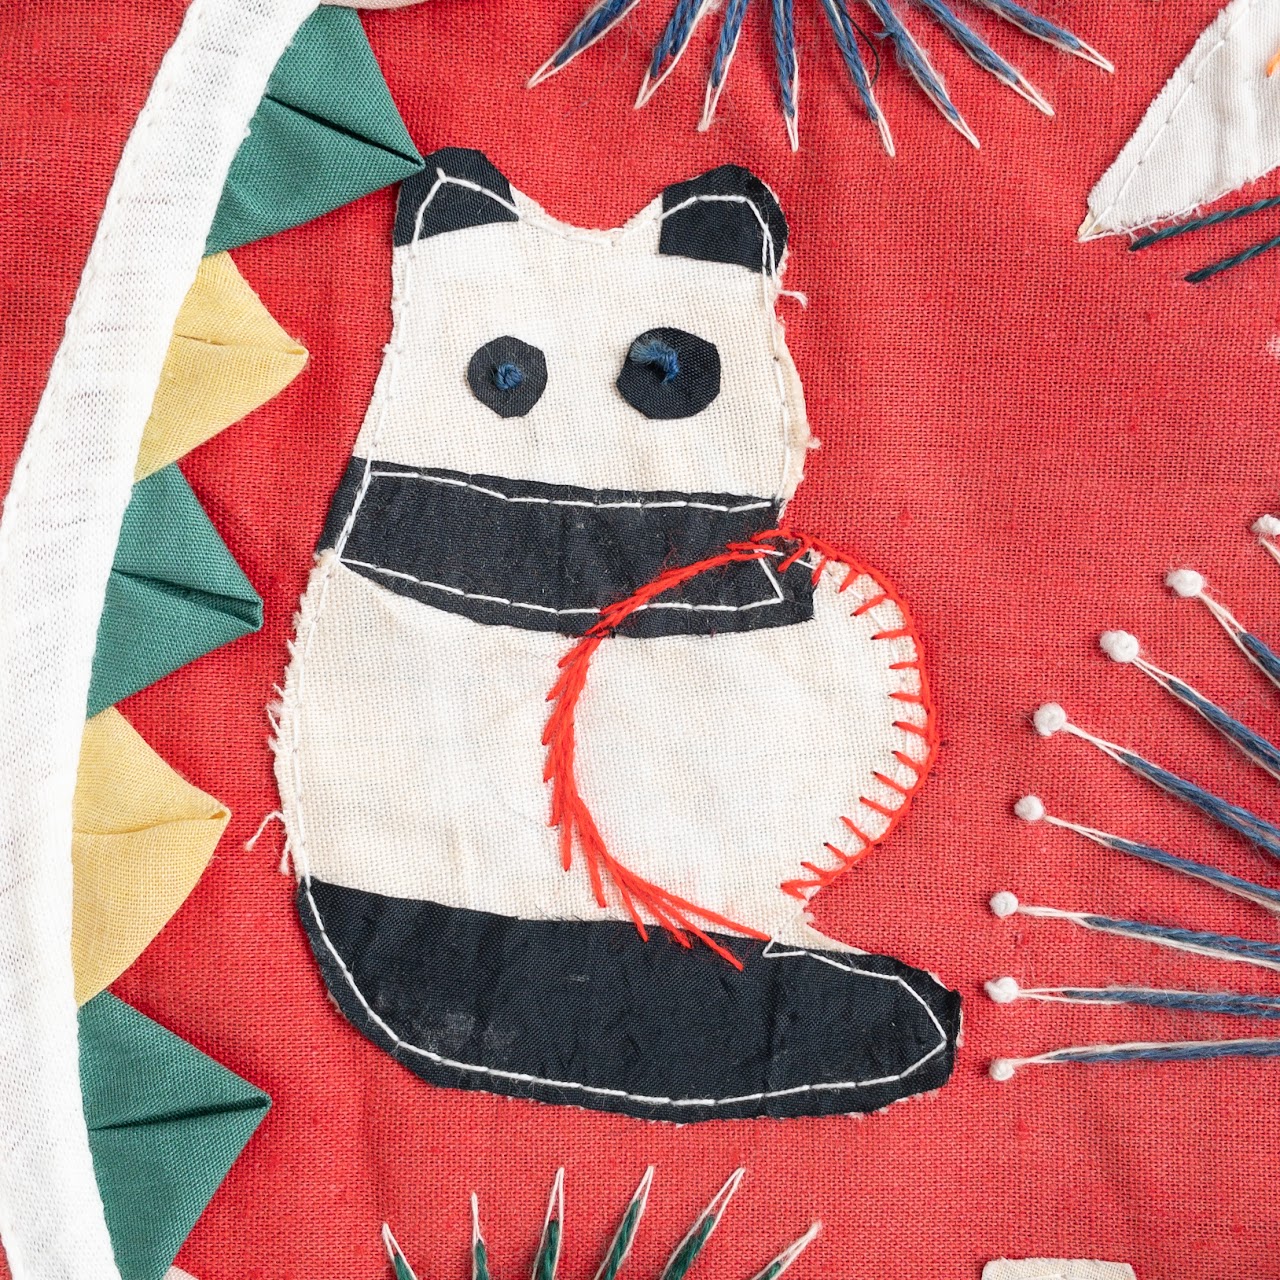 Chinese Vintage Bai Jim Bie Folk Art Quilt